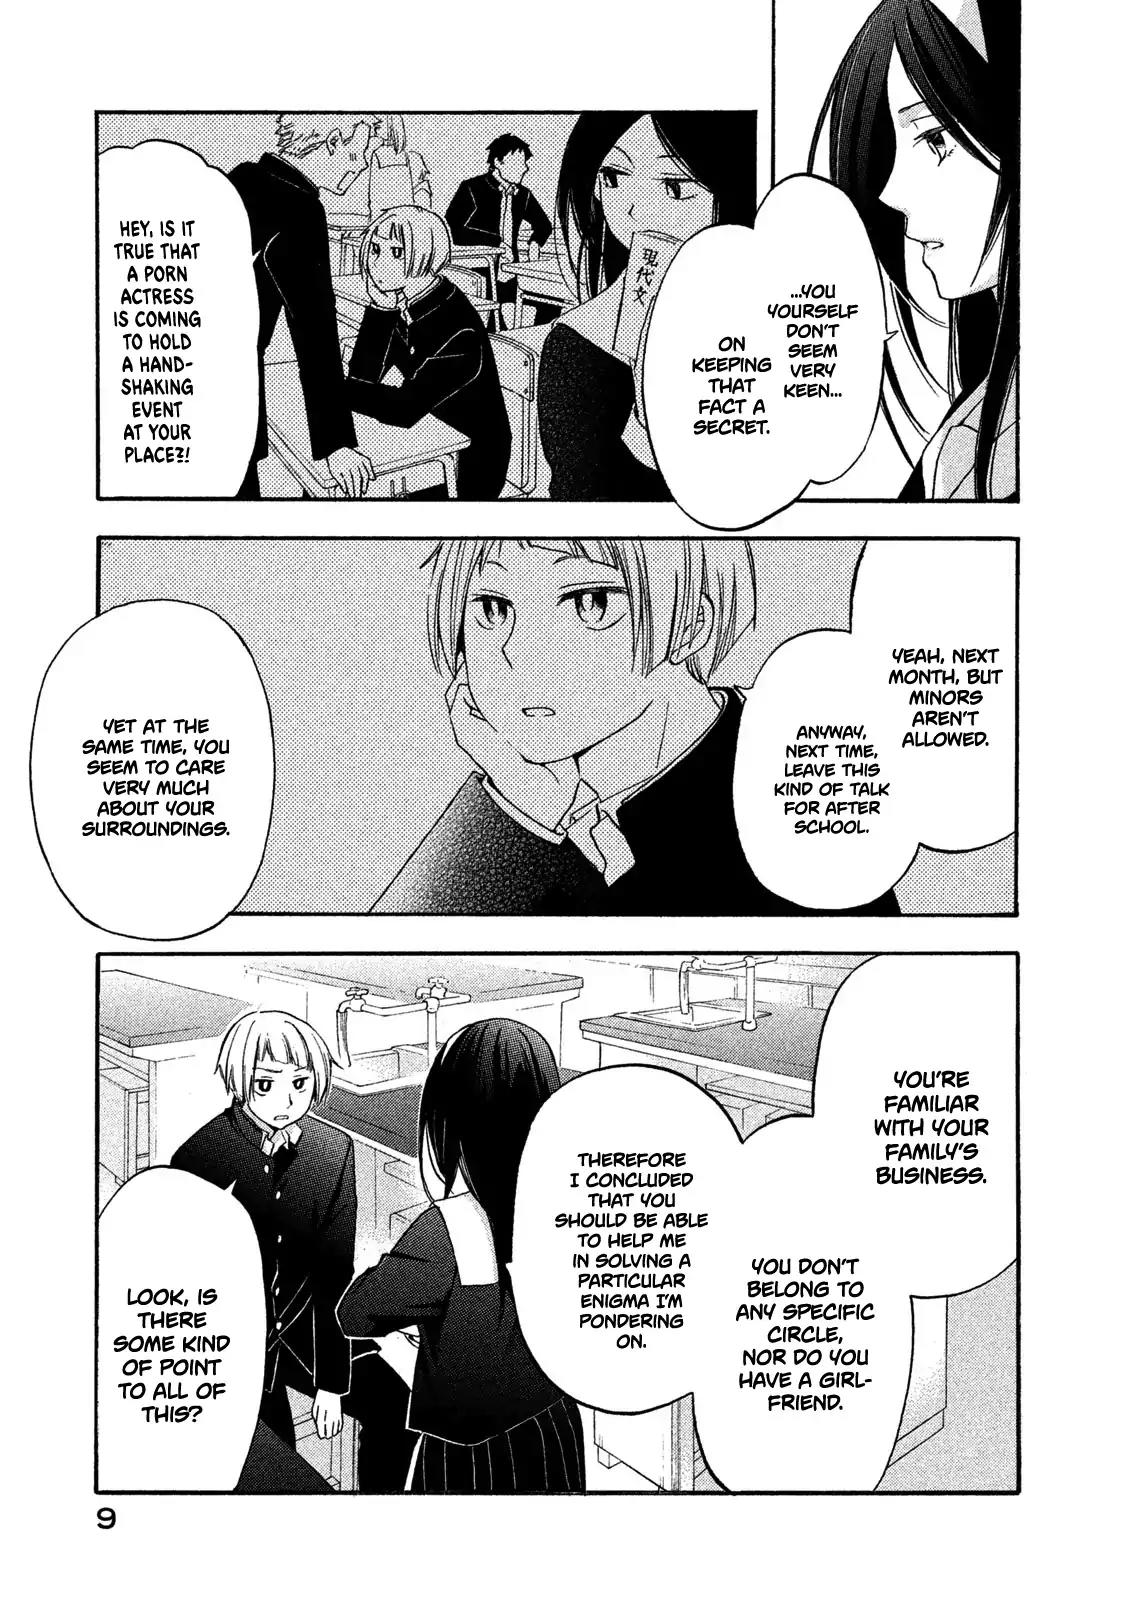 Hanazono and Kazoe's Bizarre After School Rendezvous Vol.1 Chapter 1: